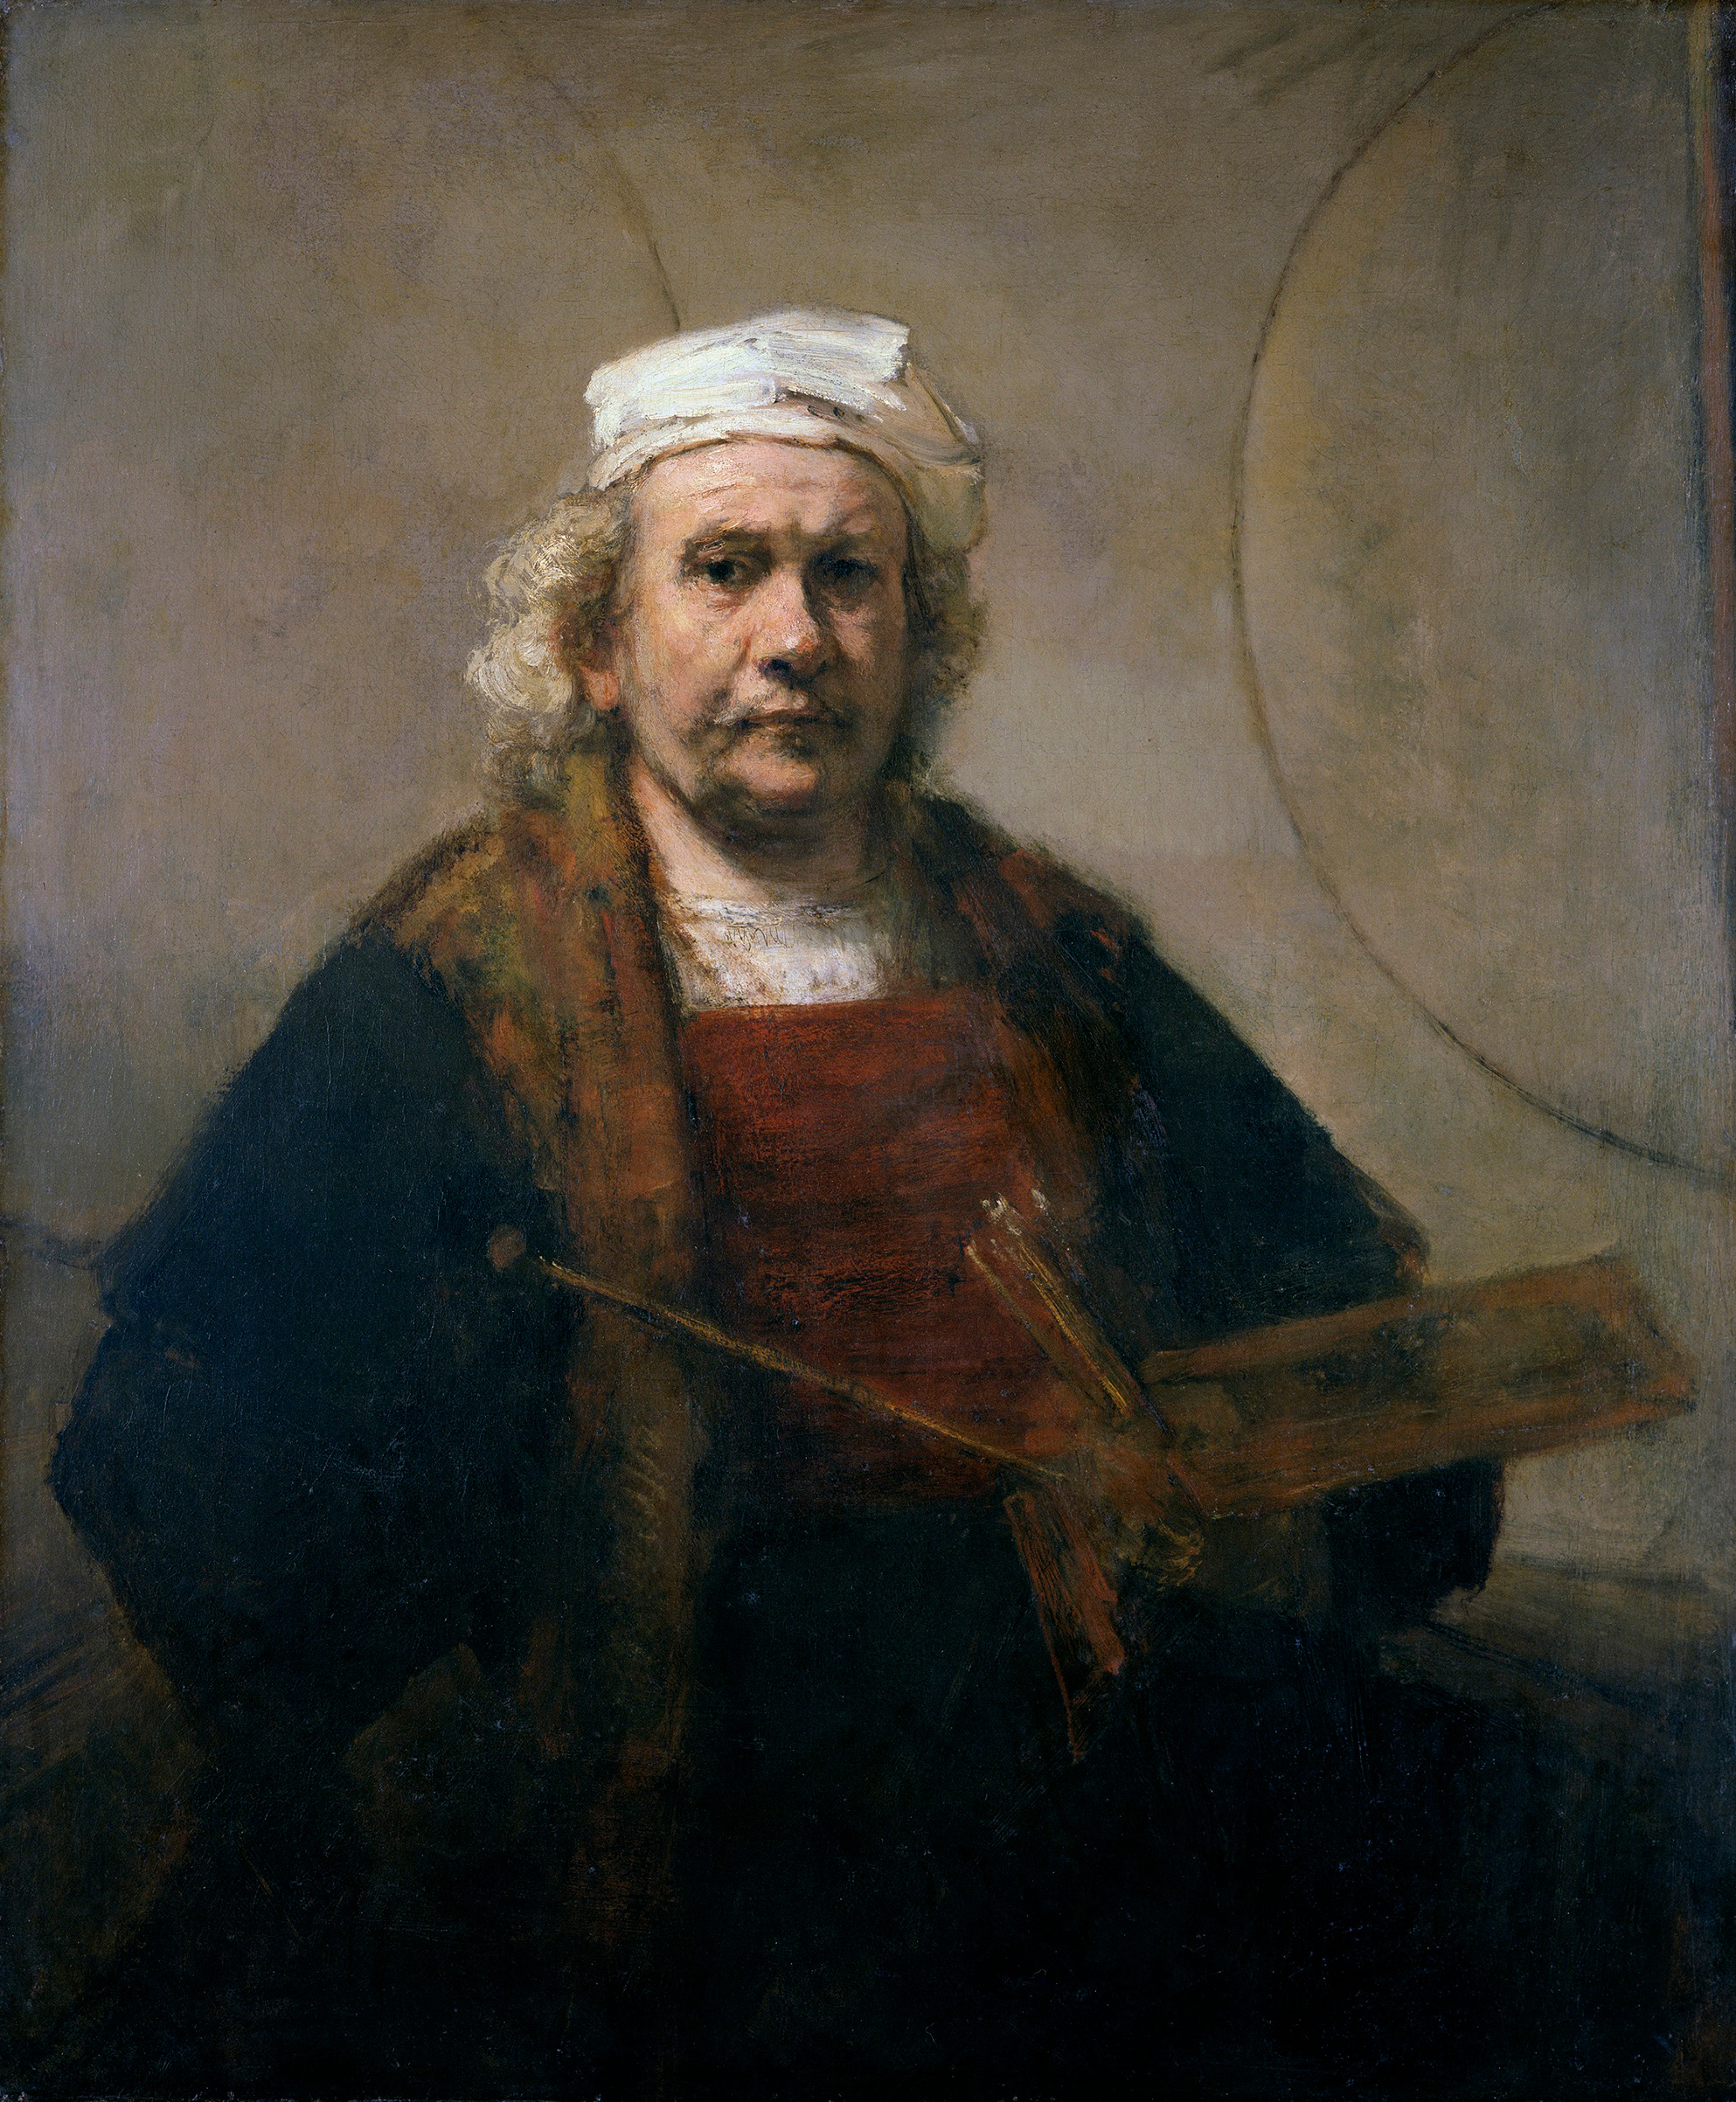 Rembrandt van Rijn, Self-Portrait with Two Circles. C. 1665-69.